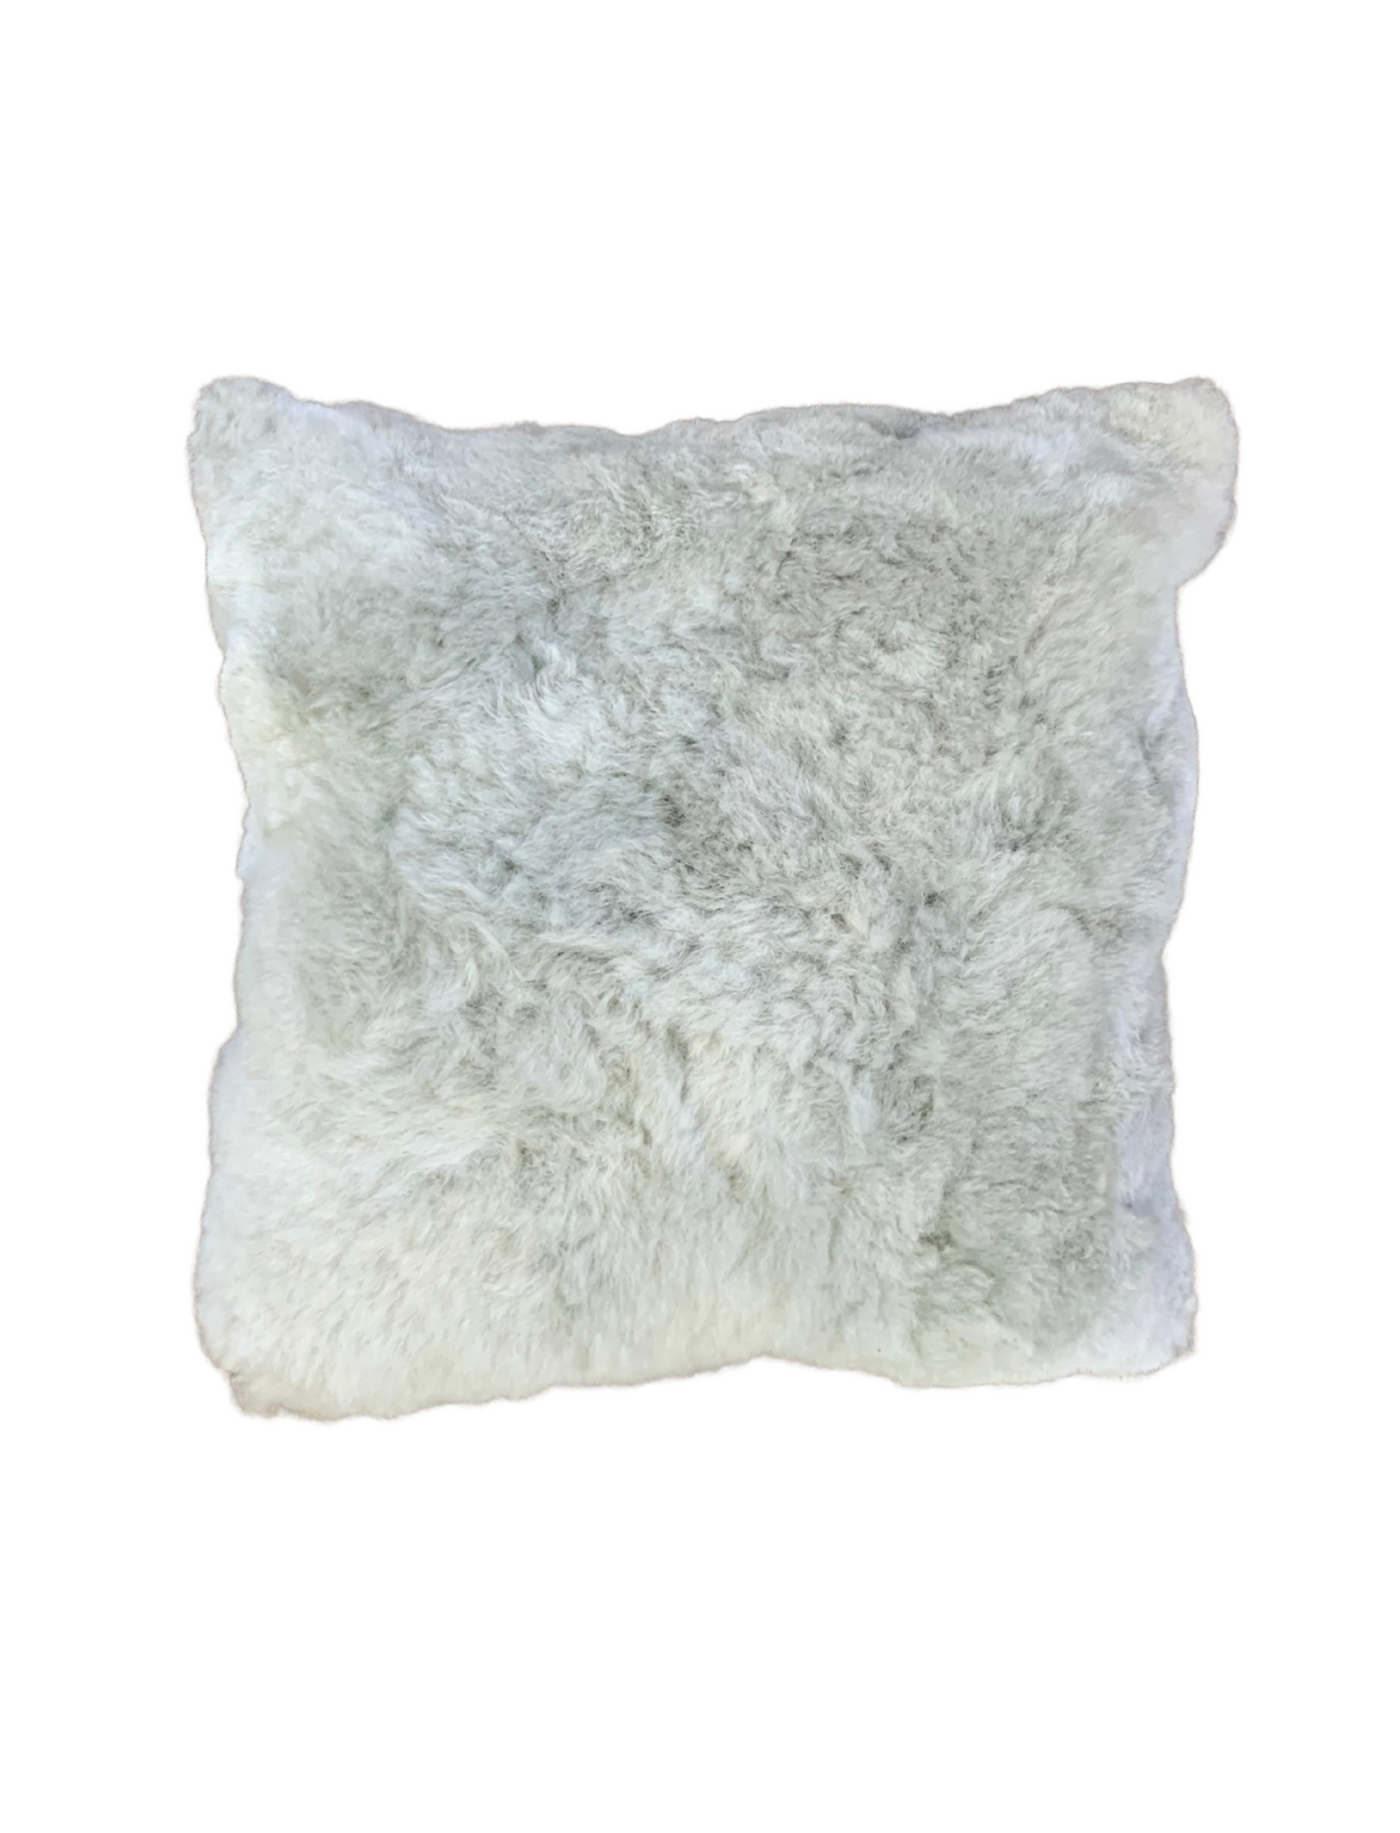 Huacaya Pillow (Medium)